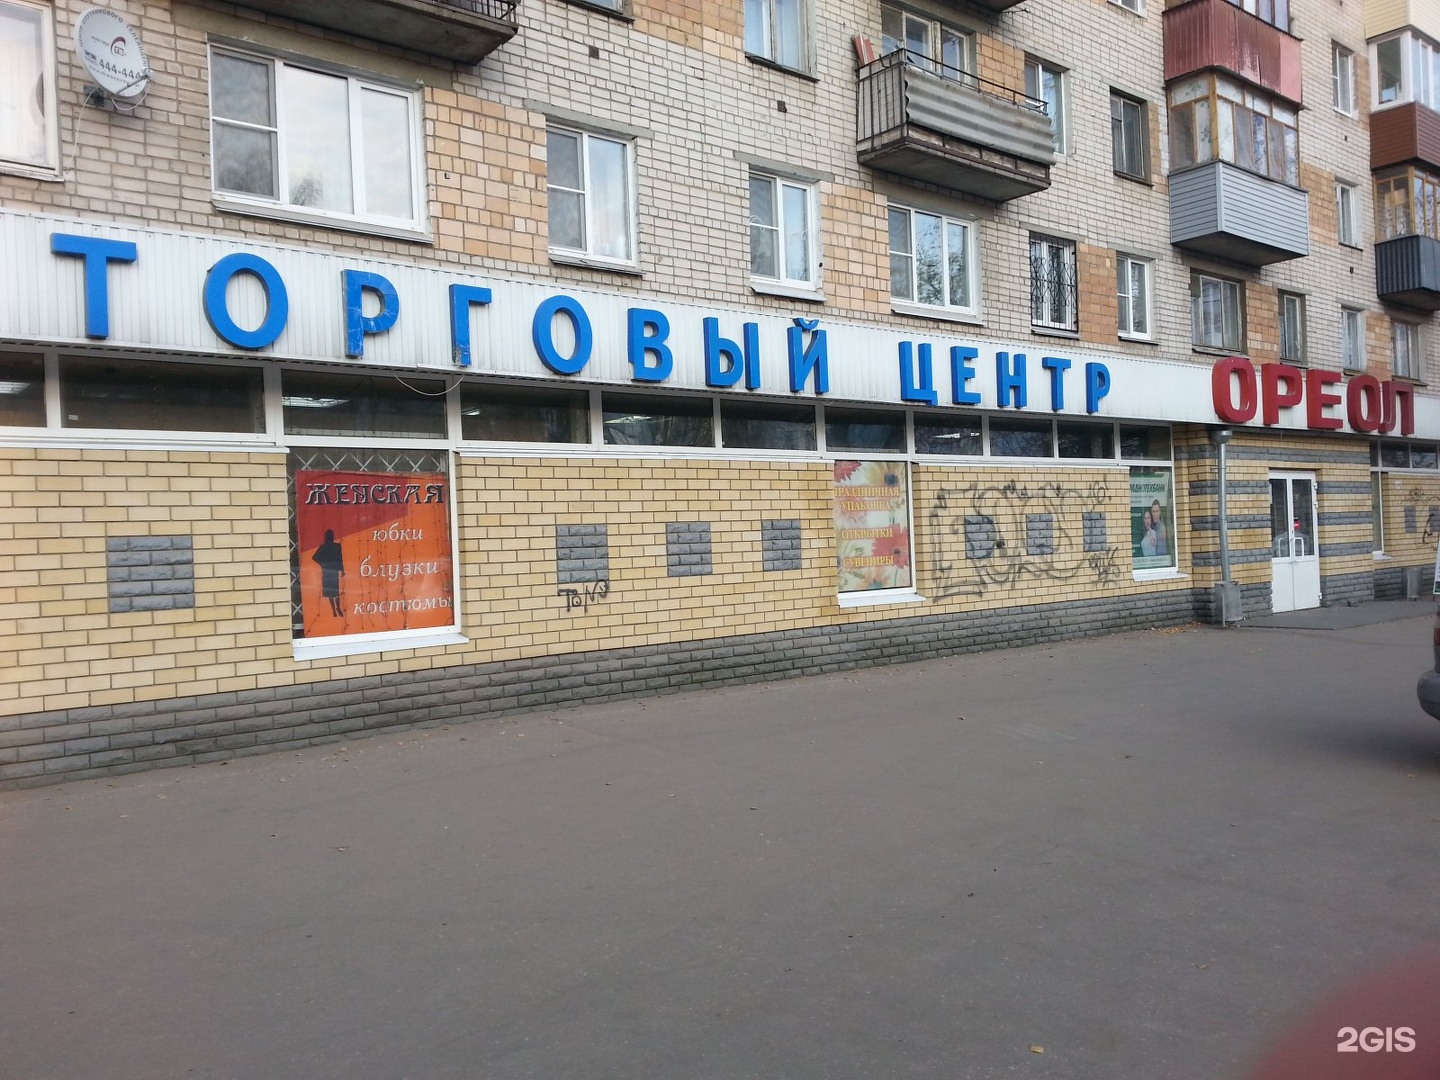 Ореол Союз Нижний Новгород